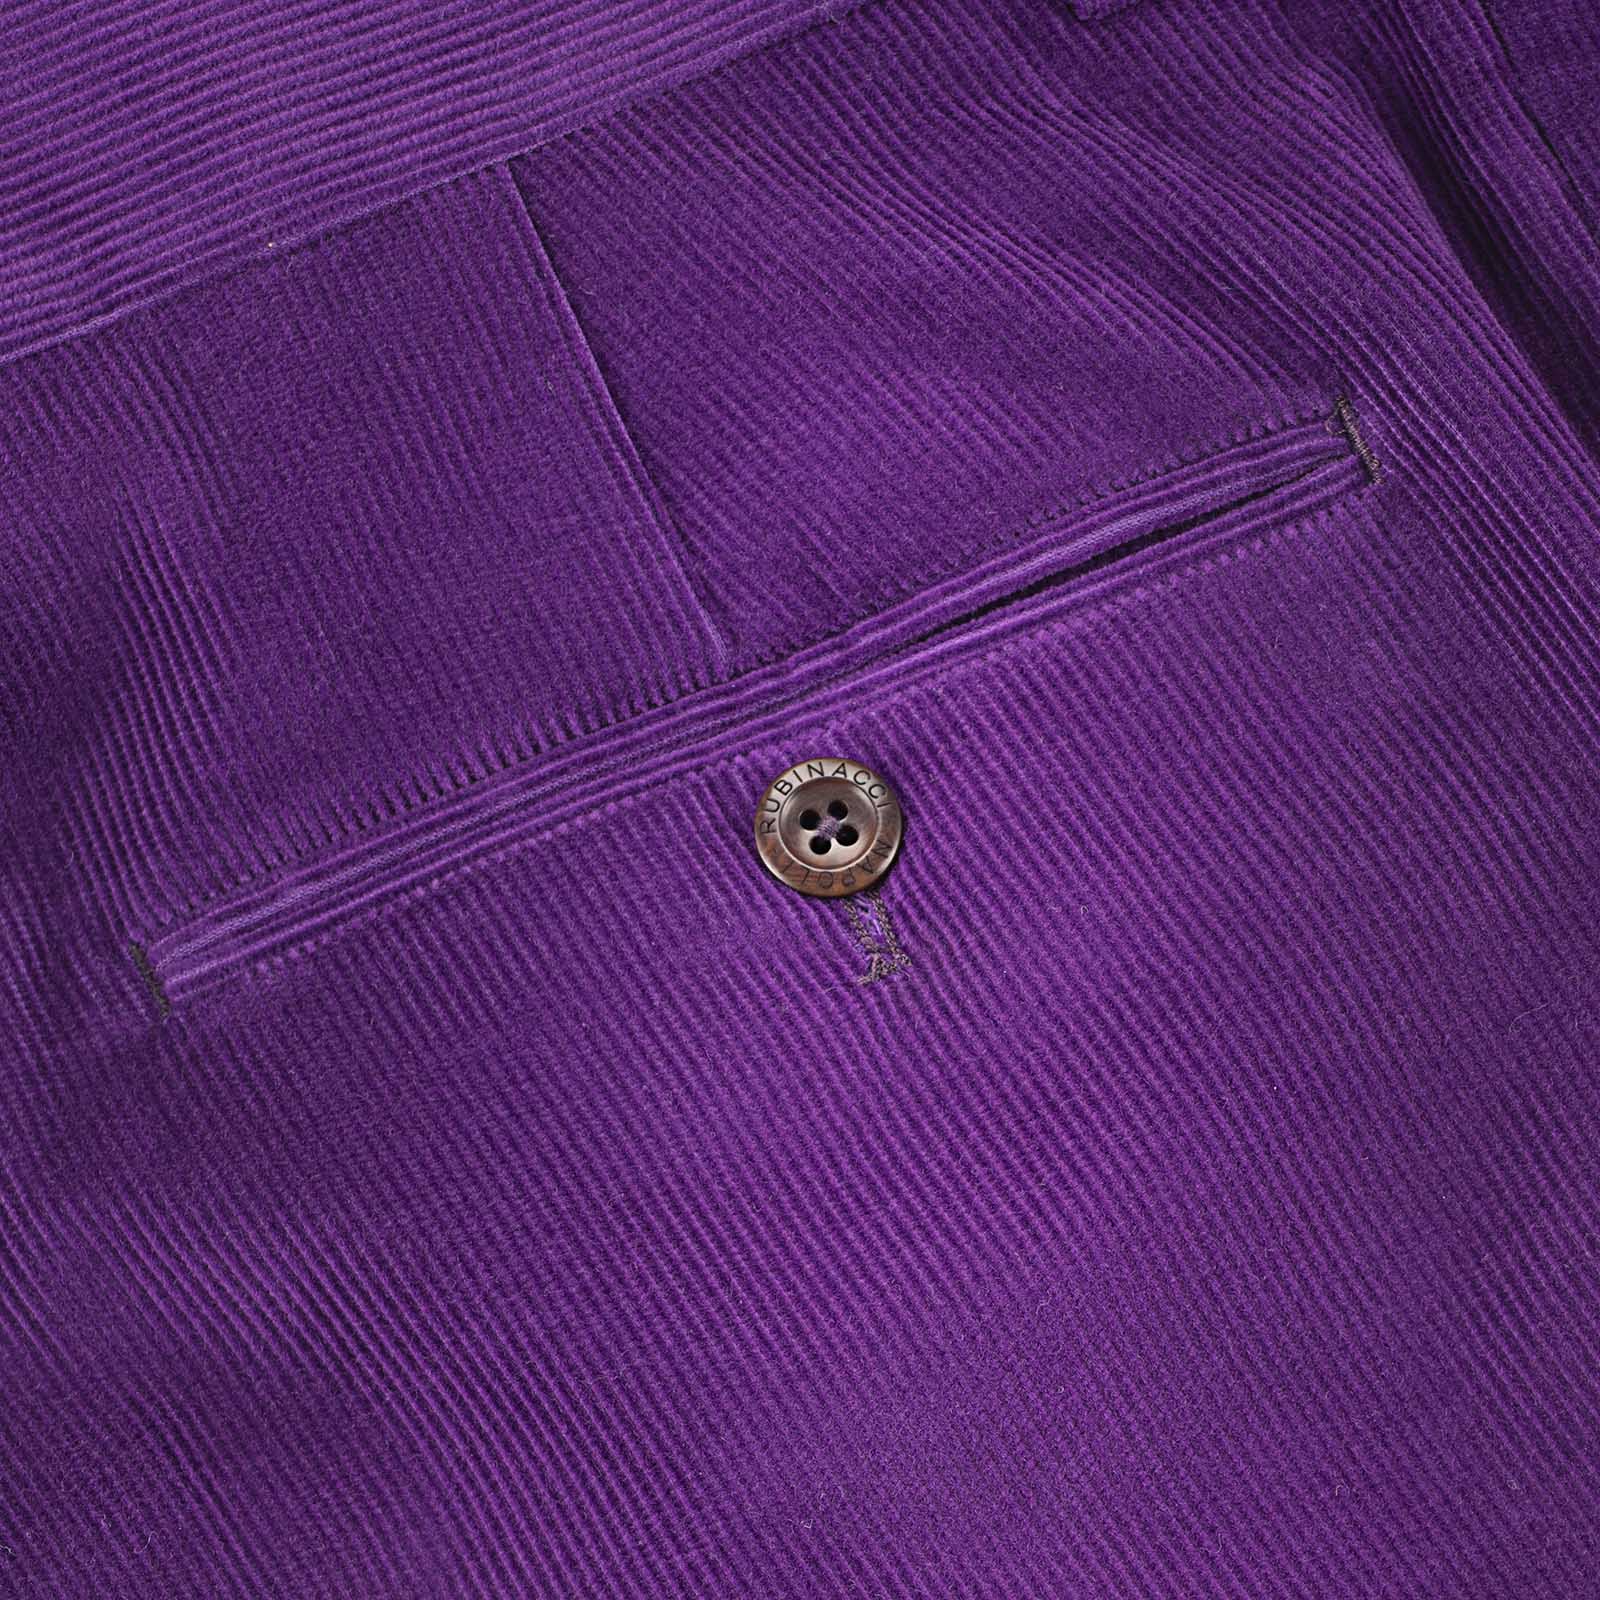 Peter England Jeans Purple Cotton Slim Fit Trousers